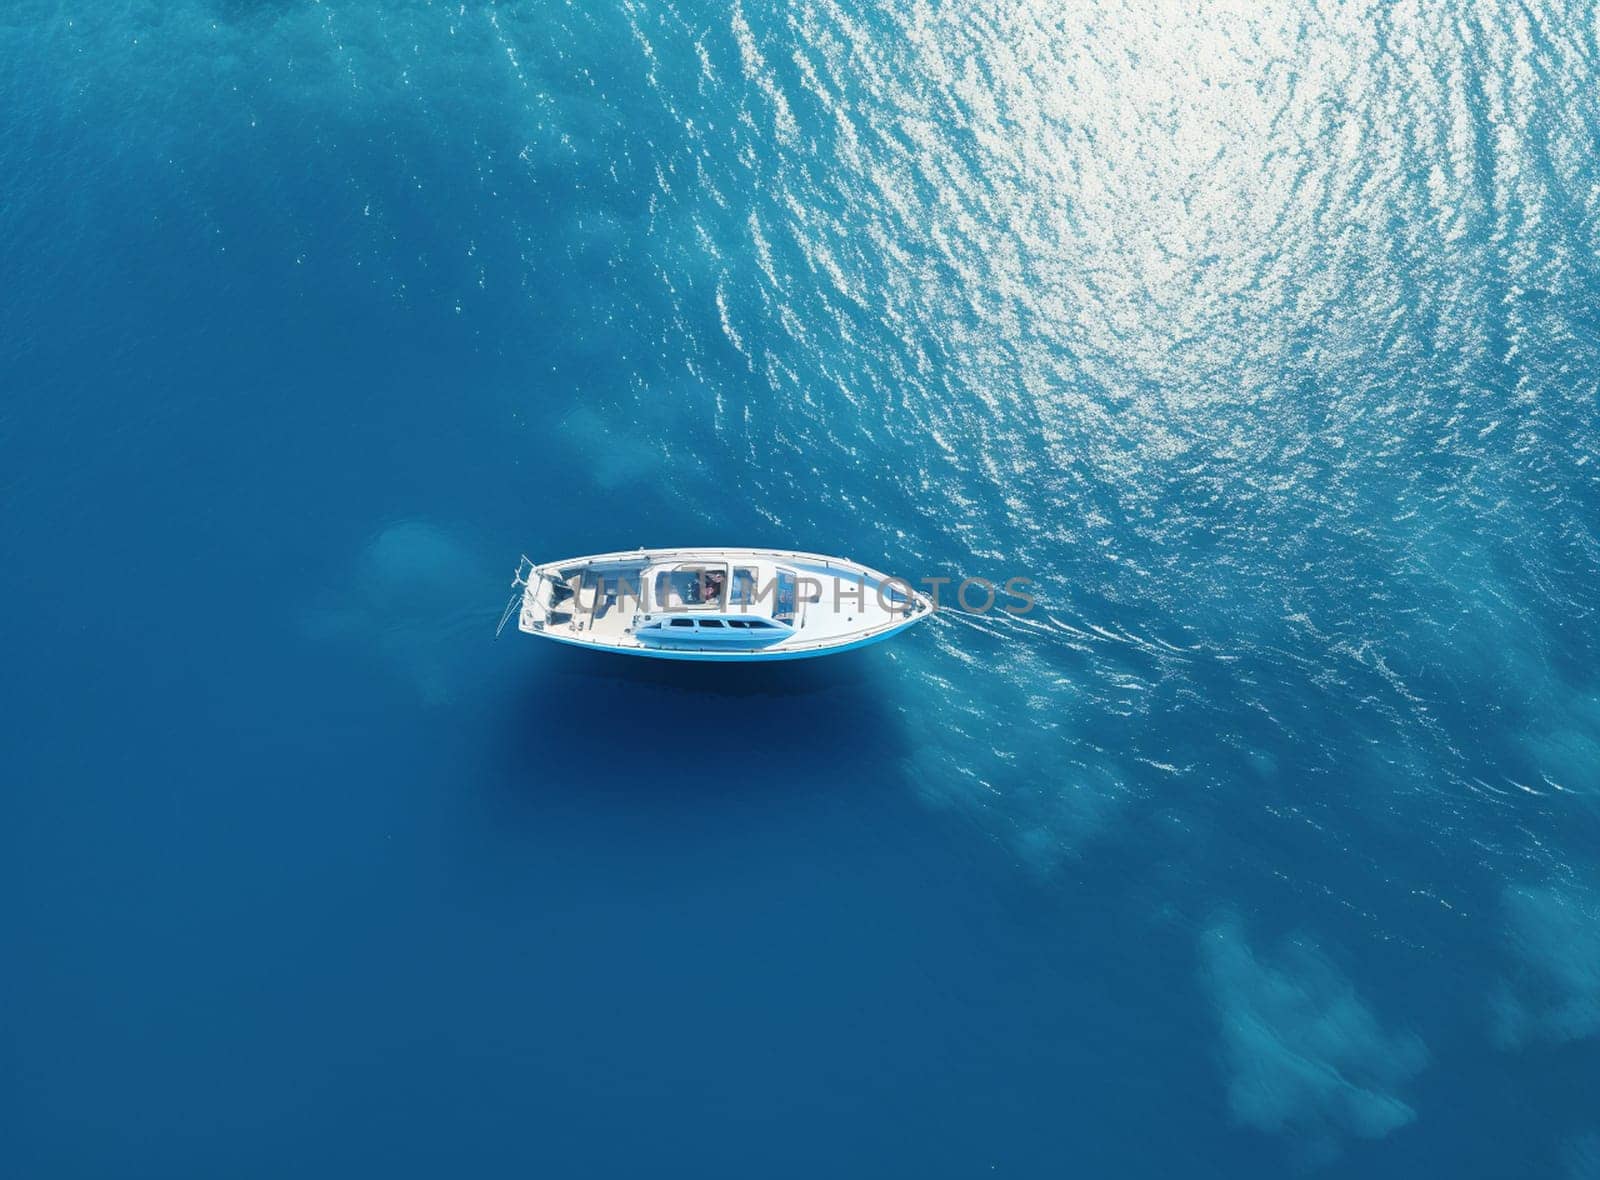 Aerial drone photo of small luxury yacht cruising in deep blue sea near Aegean island, Greece. High quality photo